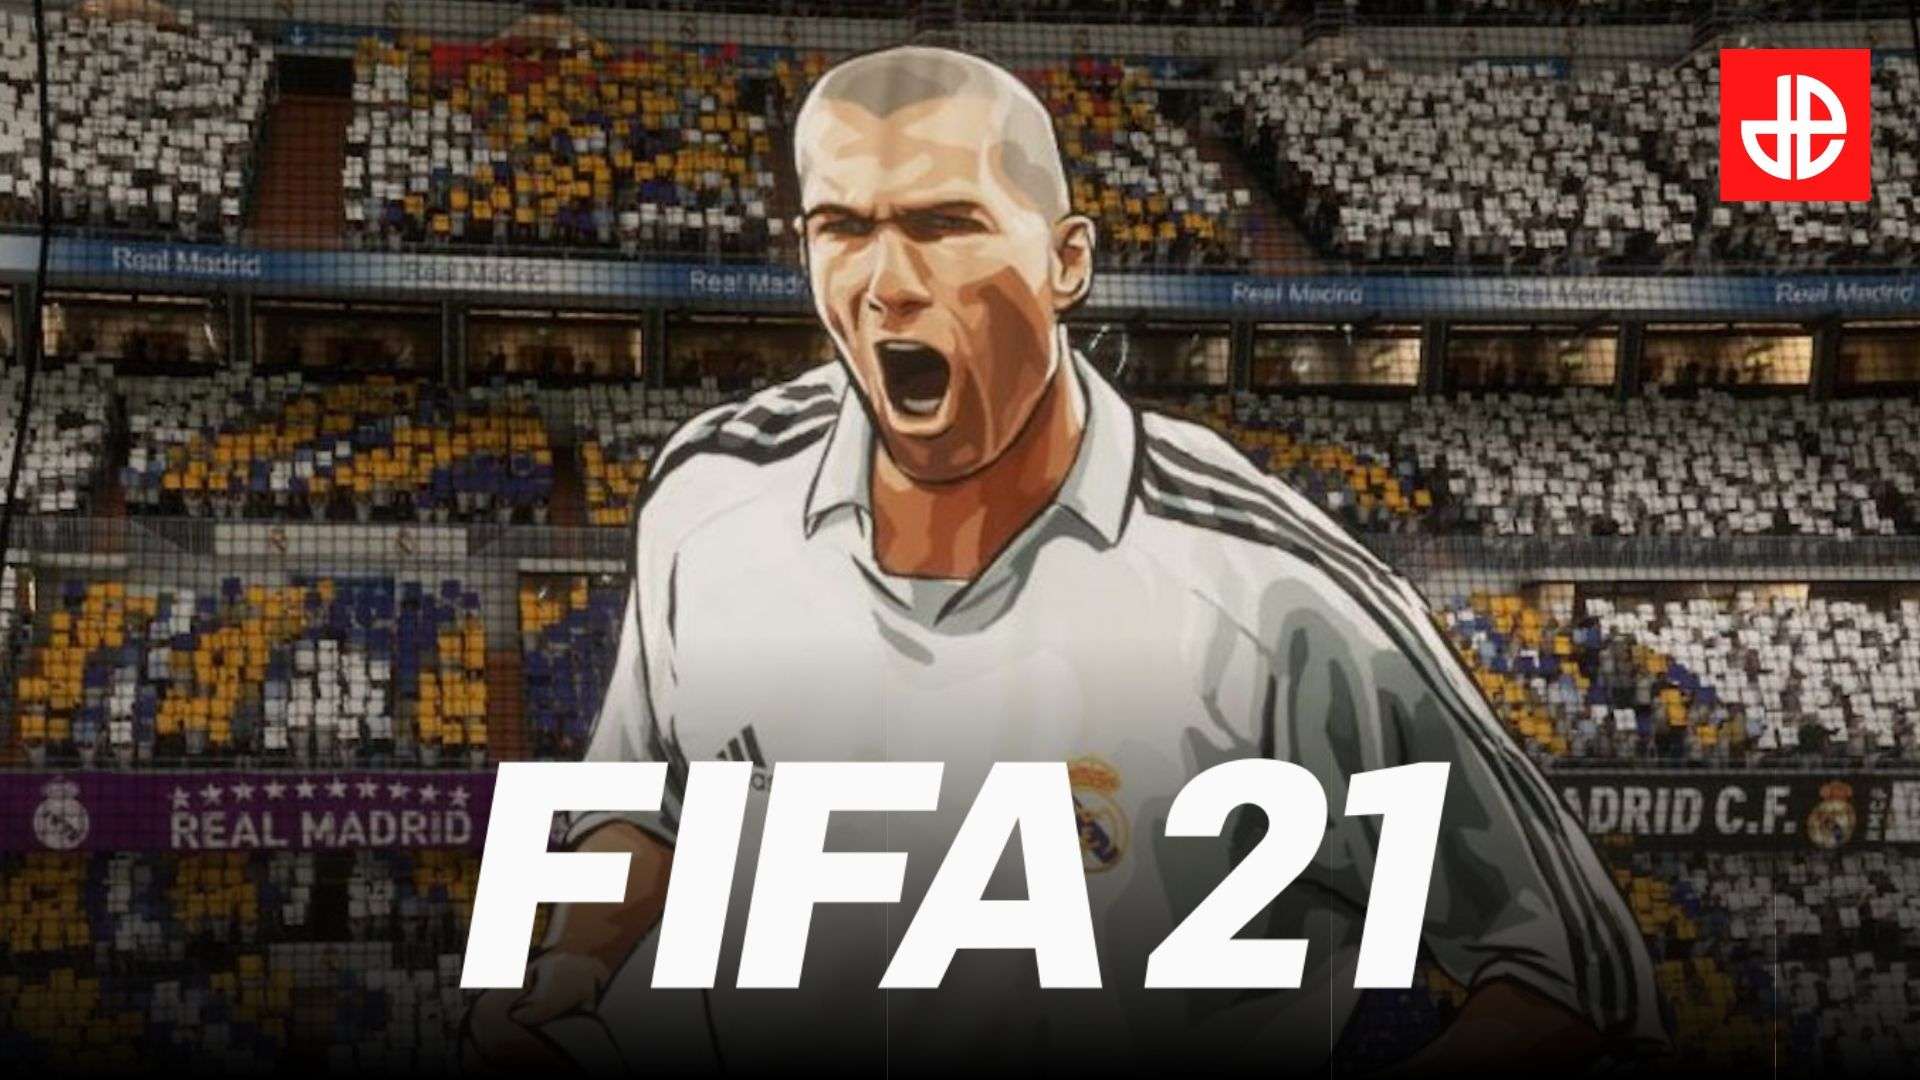 Zinedine Zidane in Real Madrid crowd on FIFA 20